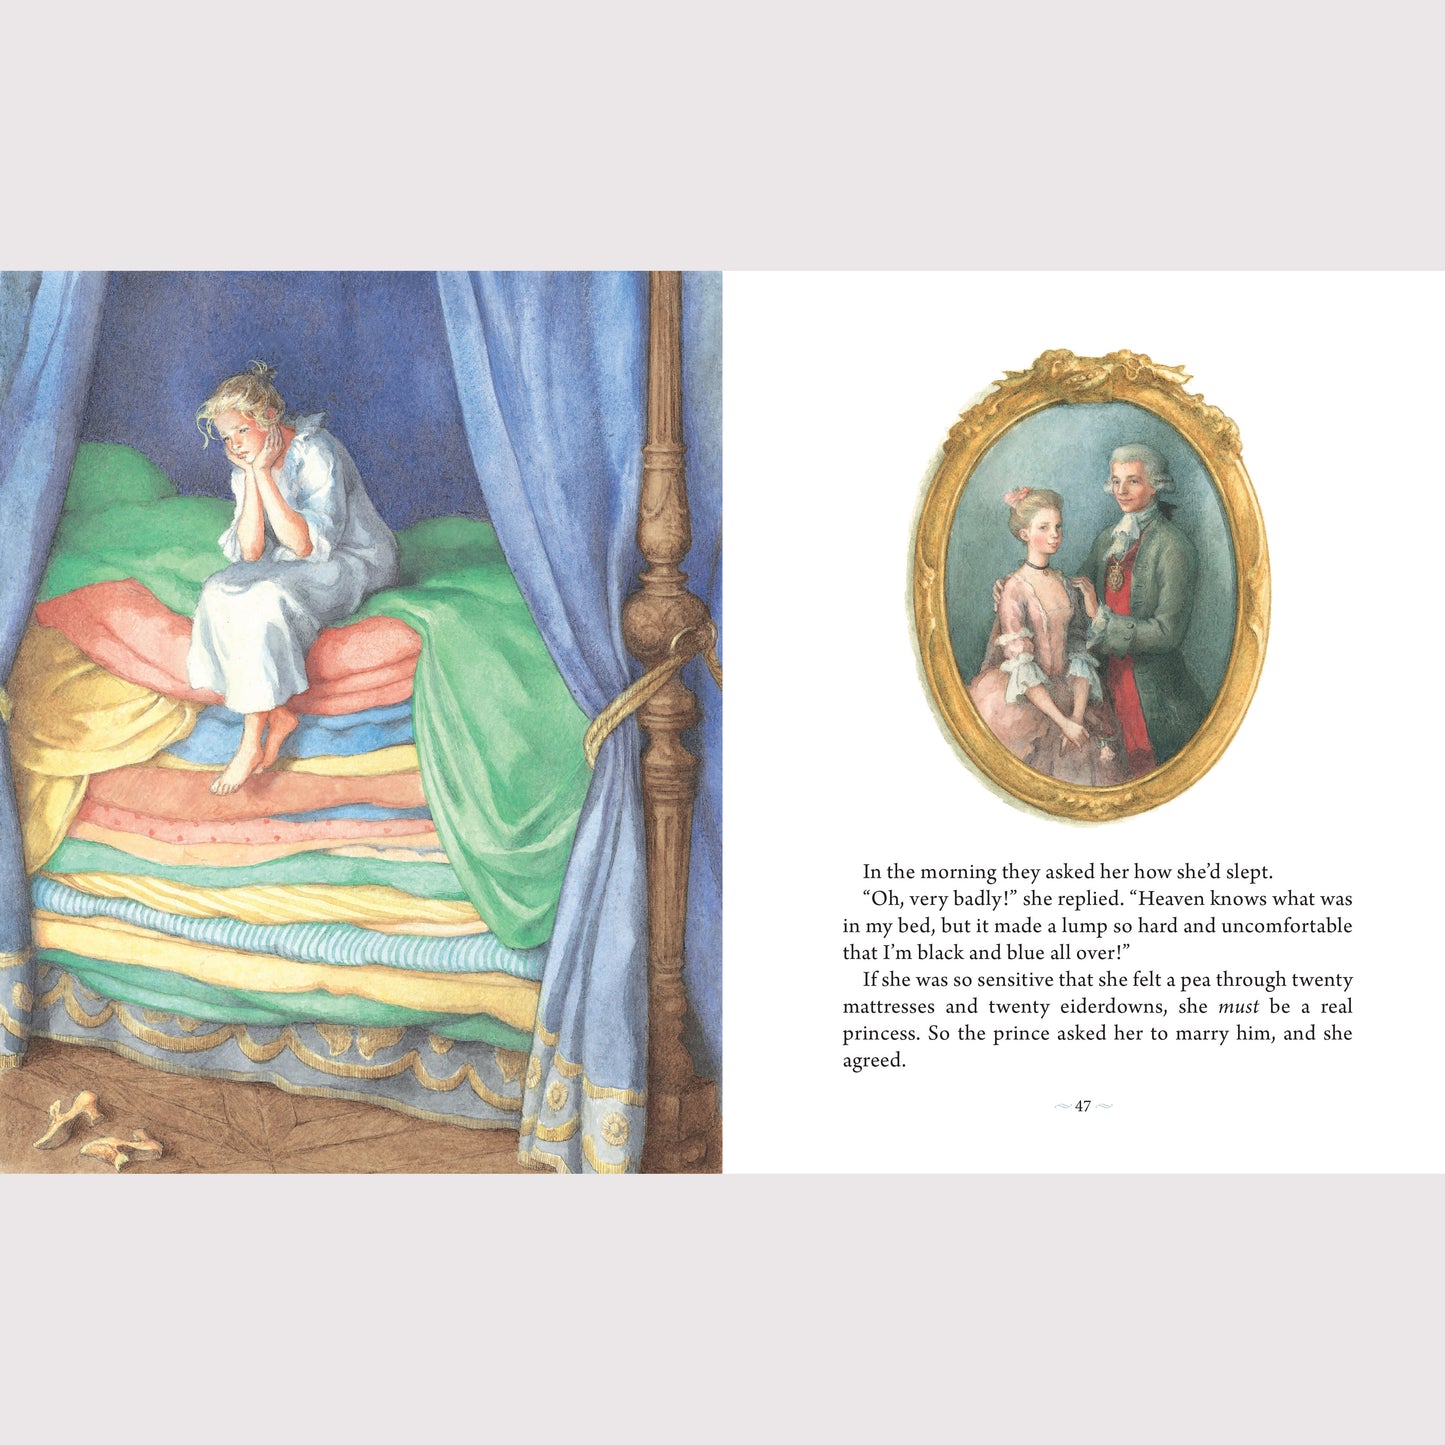 Illustrated Treasury of Hans Christian Andersen's Fairy Tales